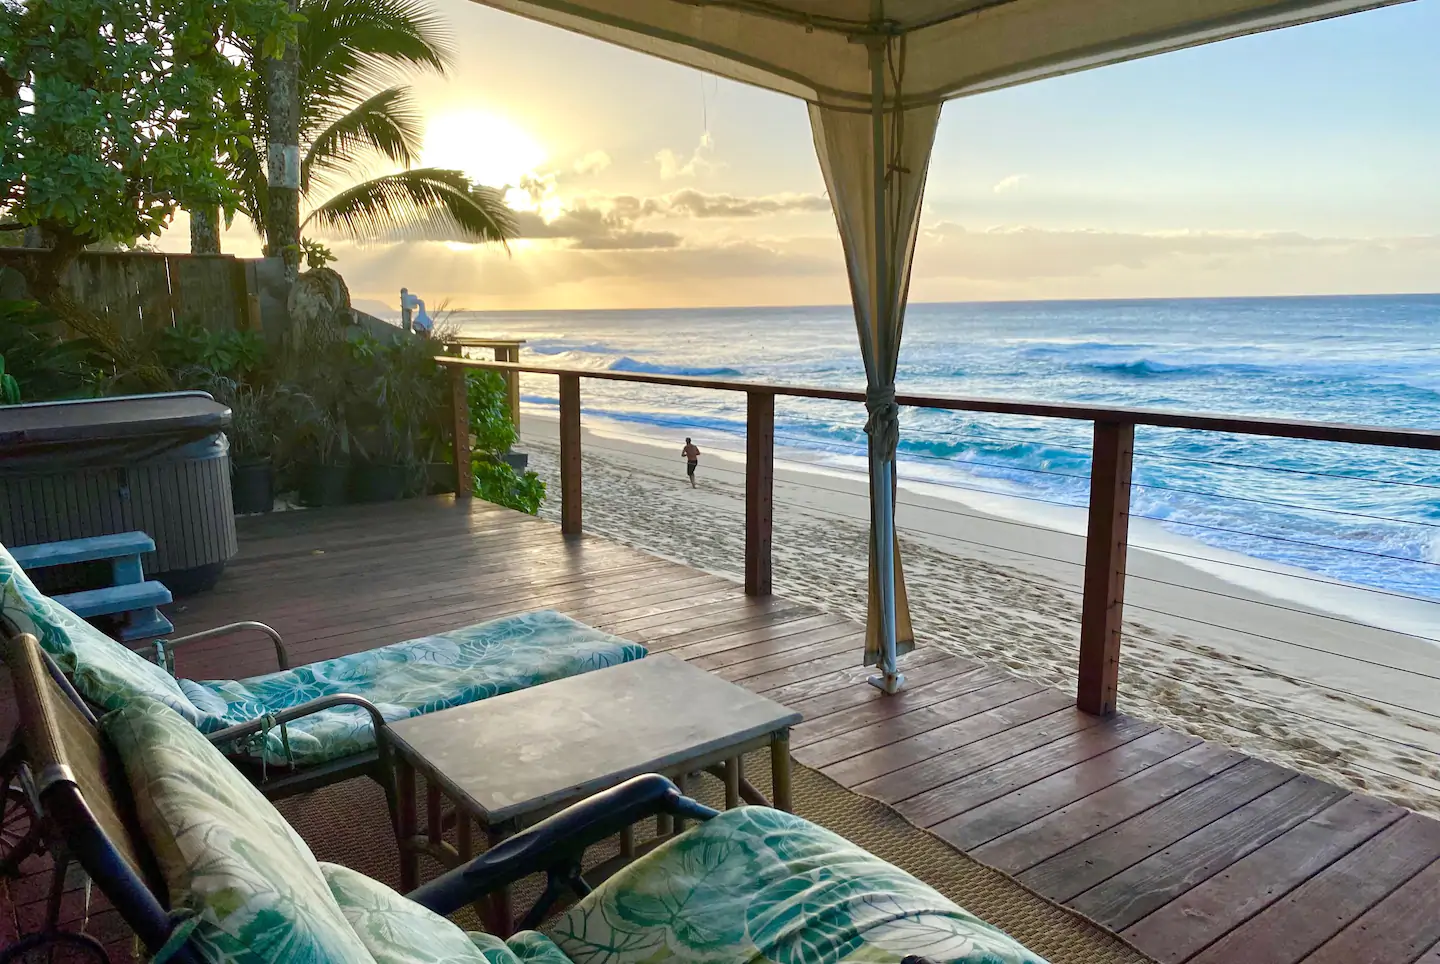 Ocean view private deck on Airbnb in Oahu